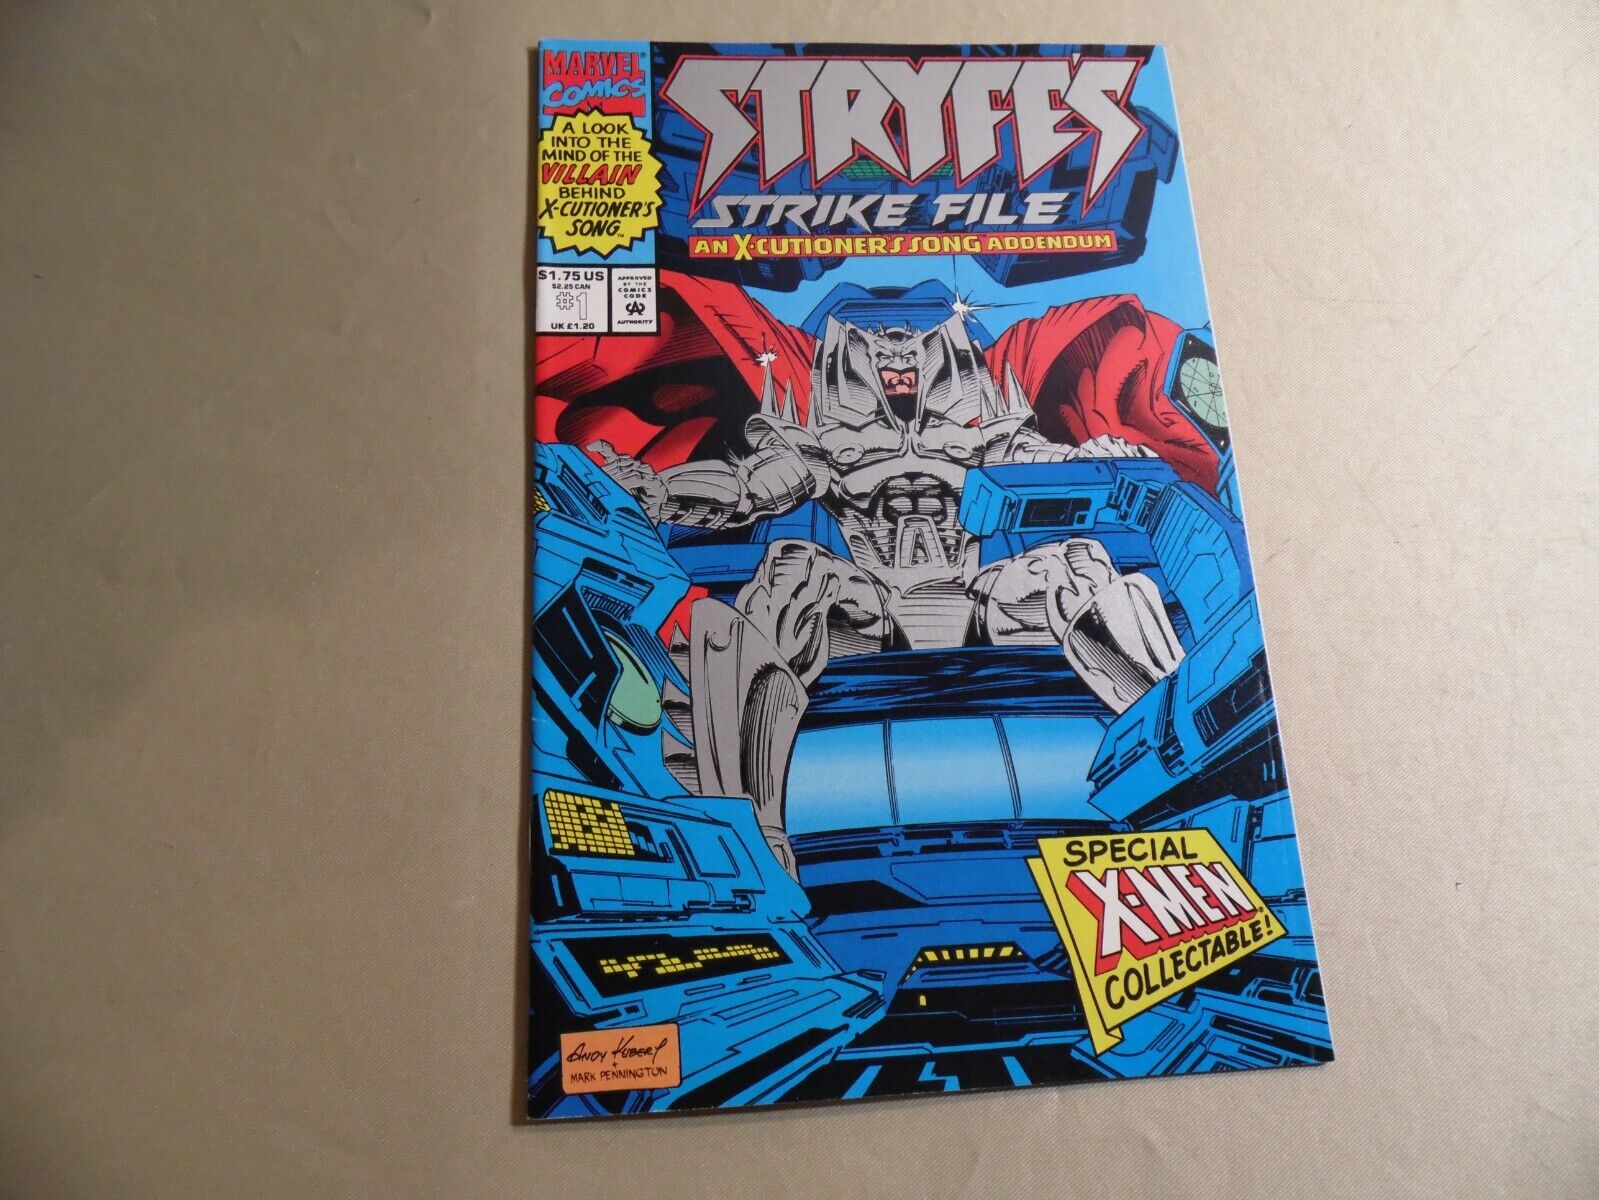 Stryfe's Strike File #1 (Marvel Comics 1993) Free Domestic Shipping